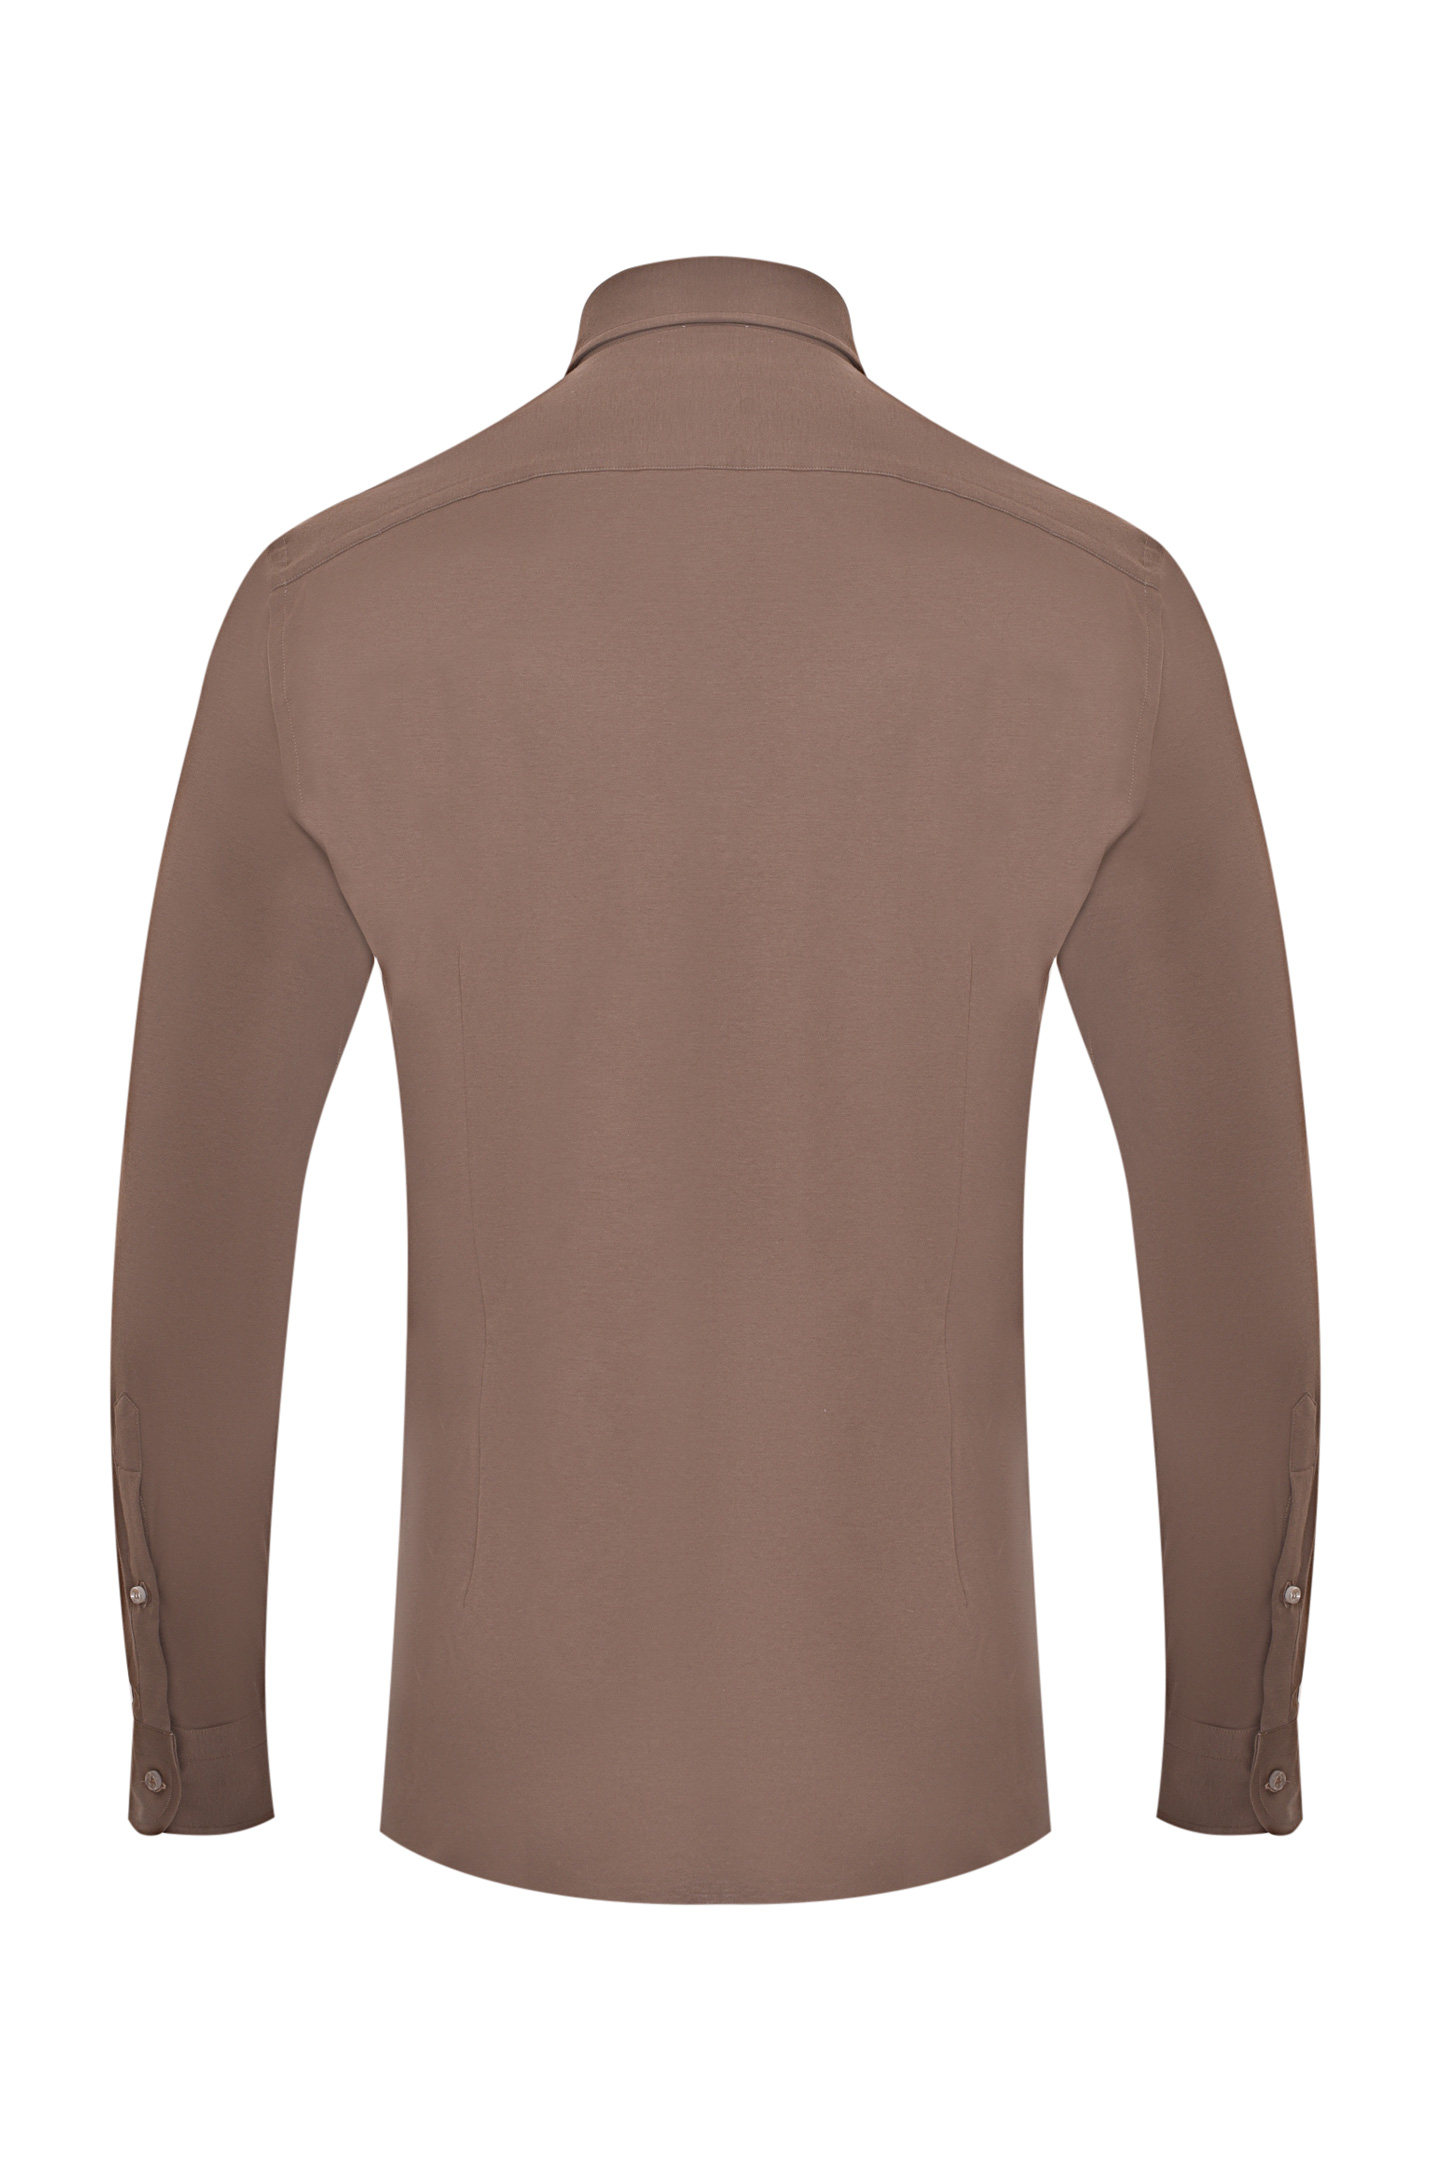 Рубашка LORO PIANA F1-FAL6123, цвет: Коричневый, Мужской